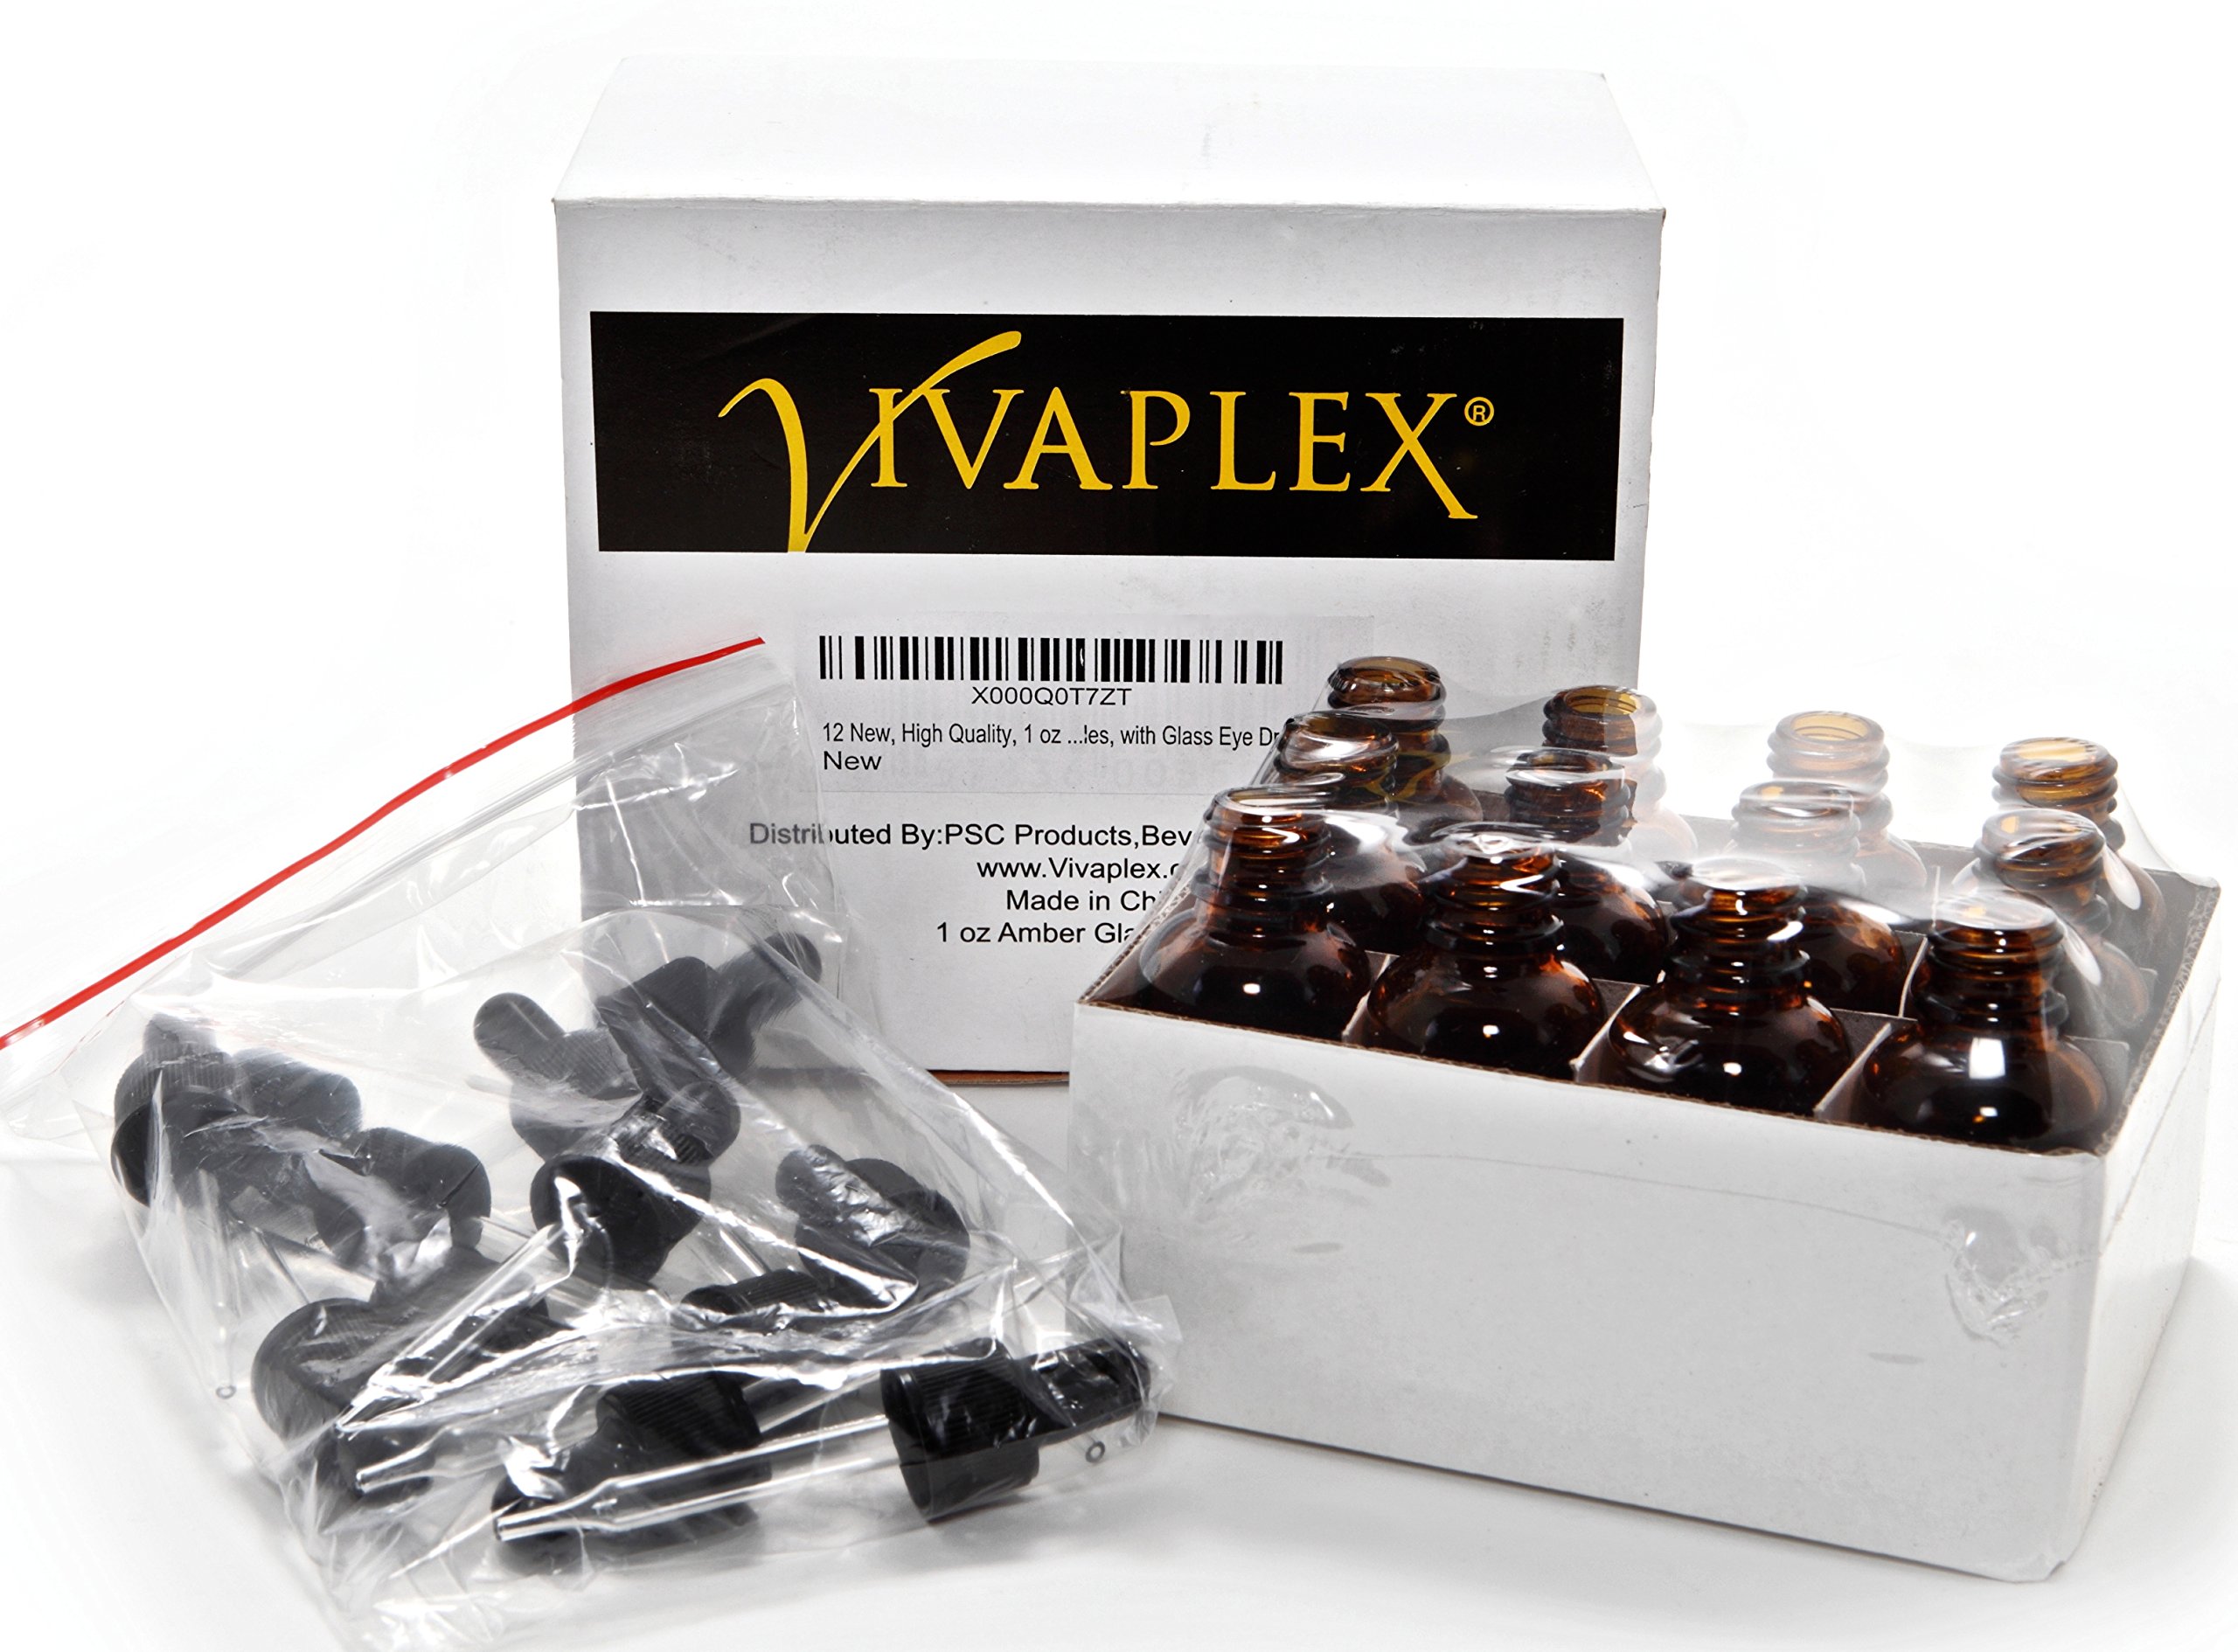 Vivaplex 12, Amber, 1 oz Glass Bottles, with Glass Eye Droppers